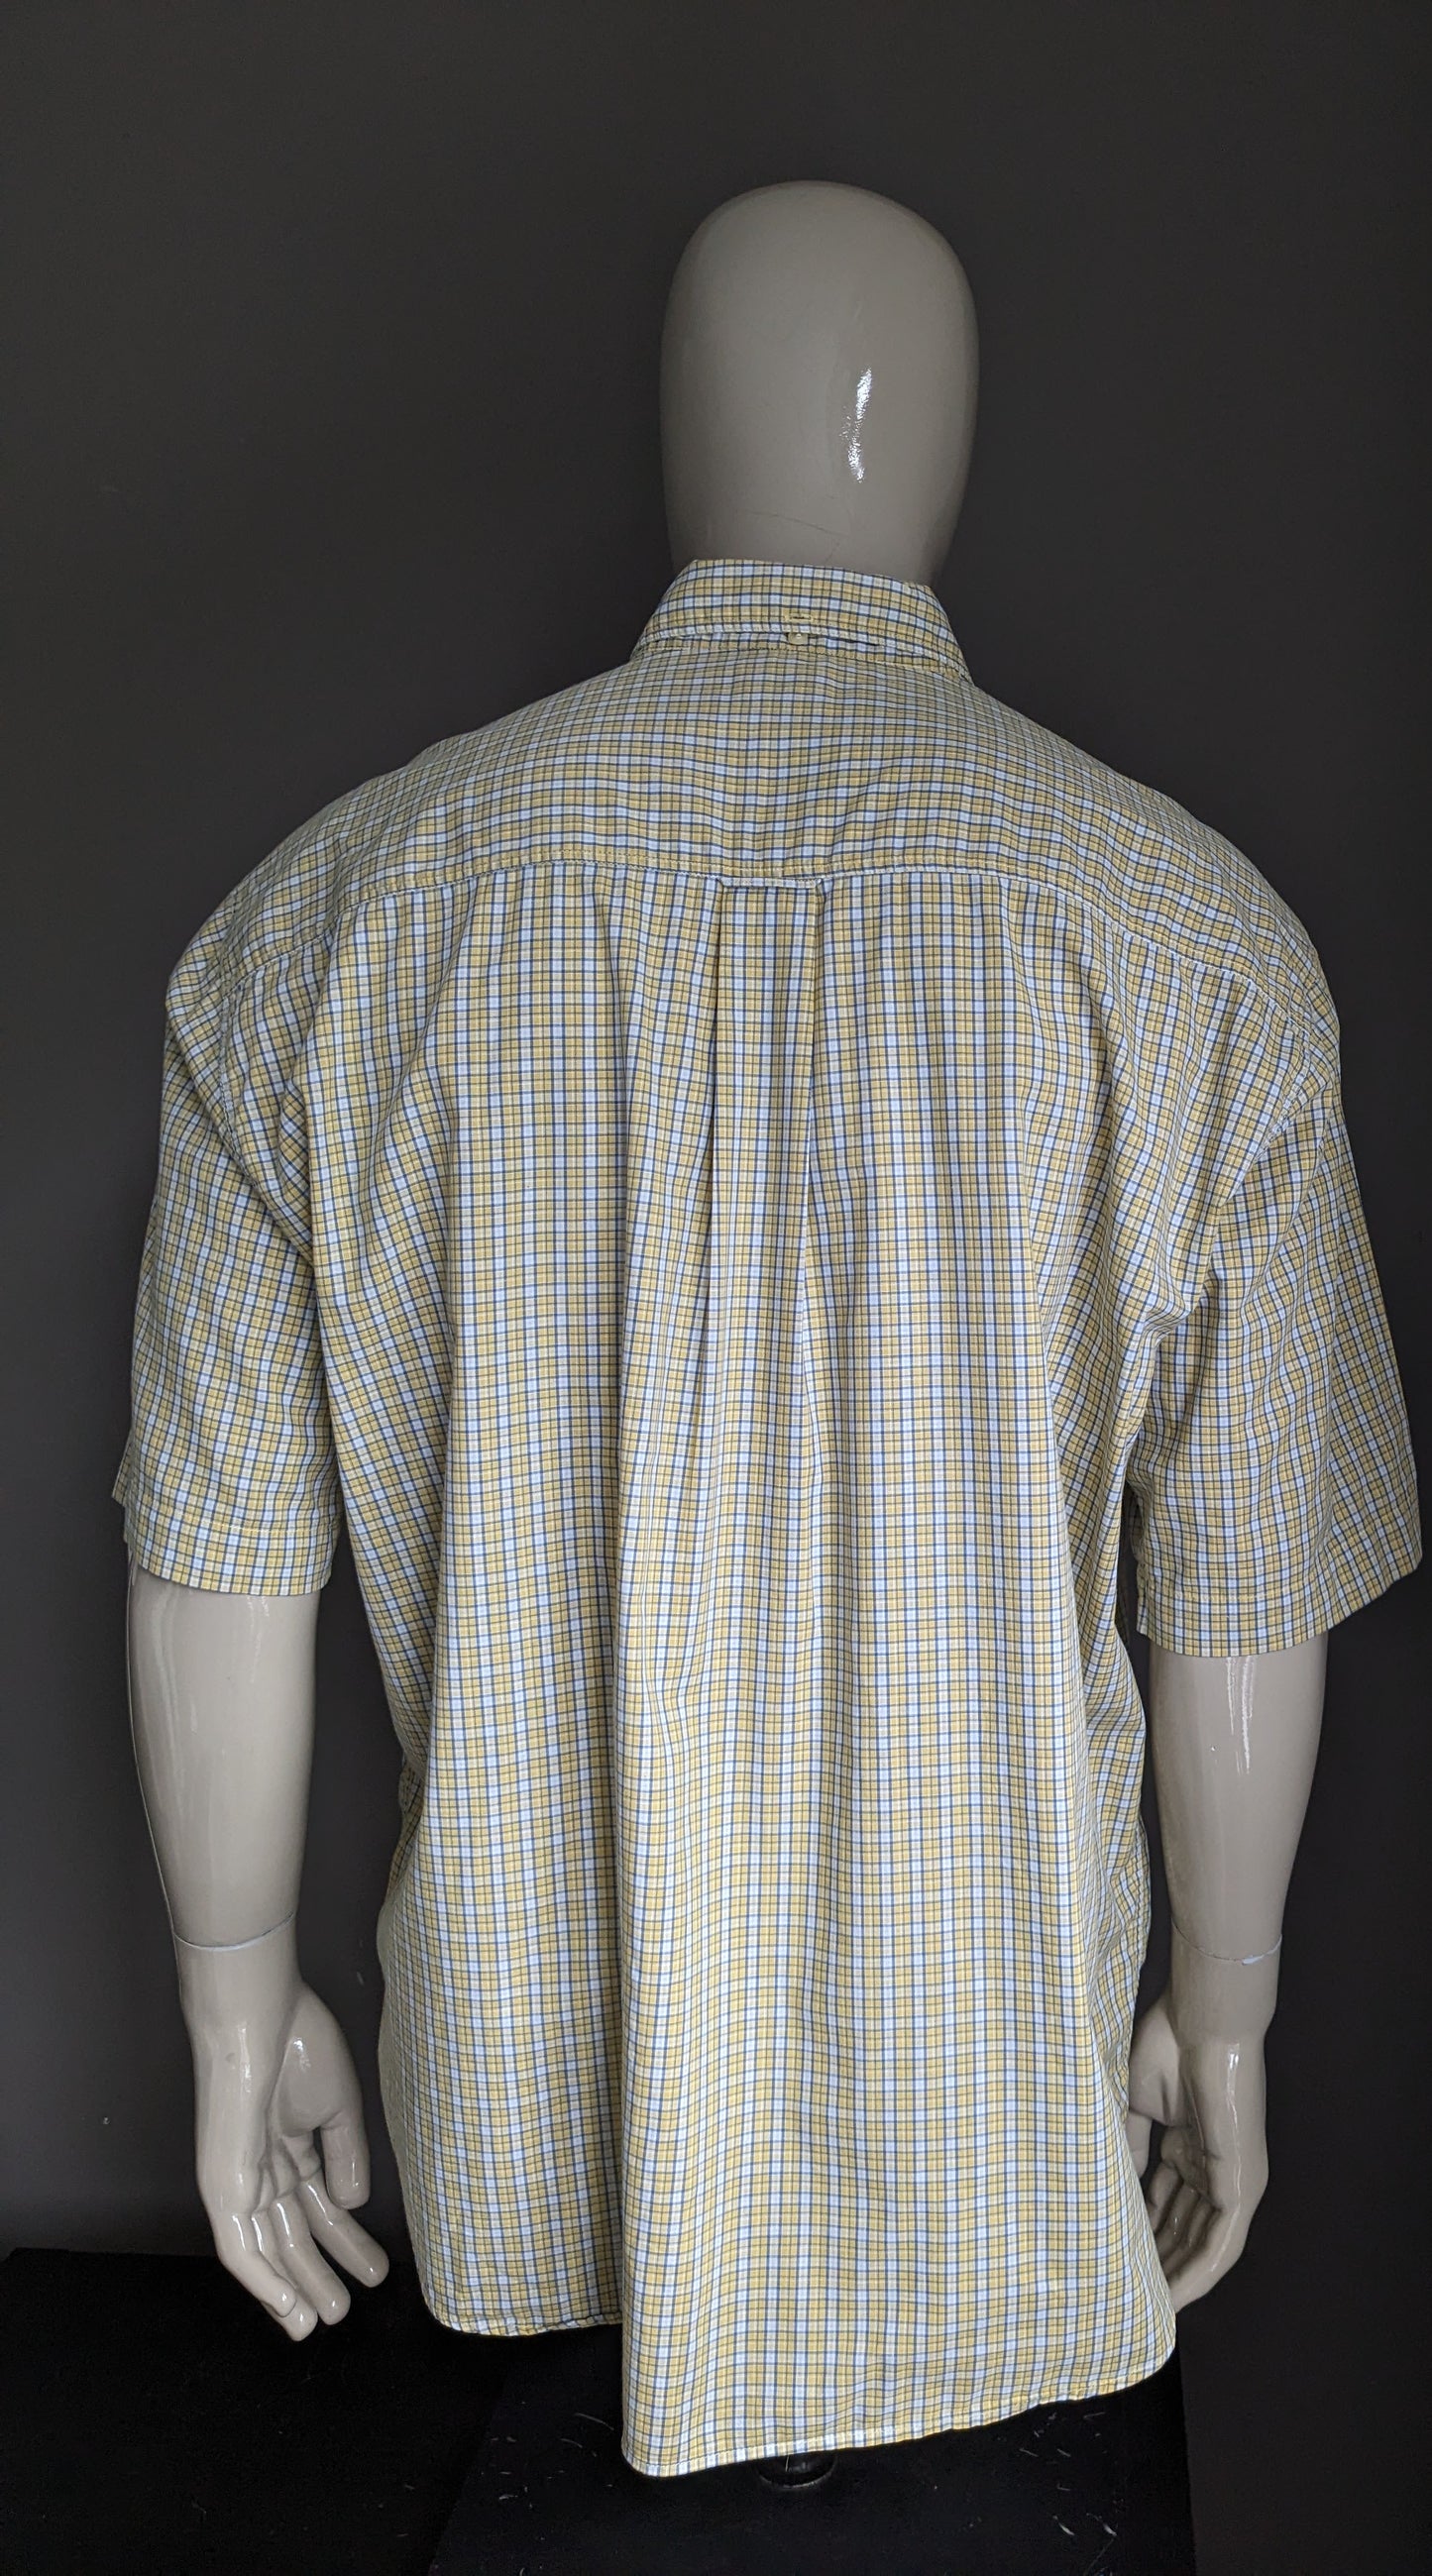 Camisa de ropa masculina Burton manga corta. Amarillo azul blanco a cuadros. Tamaño XXL / 2XL.